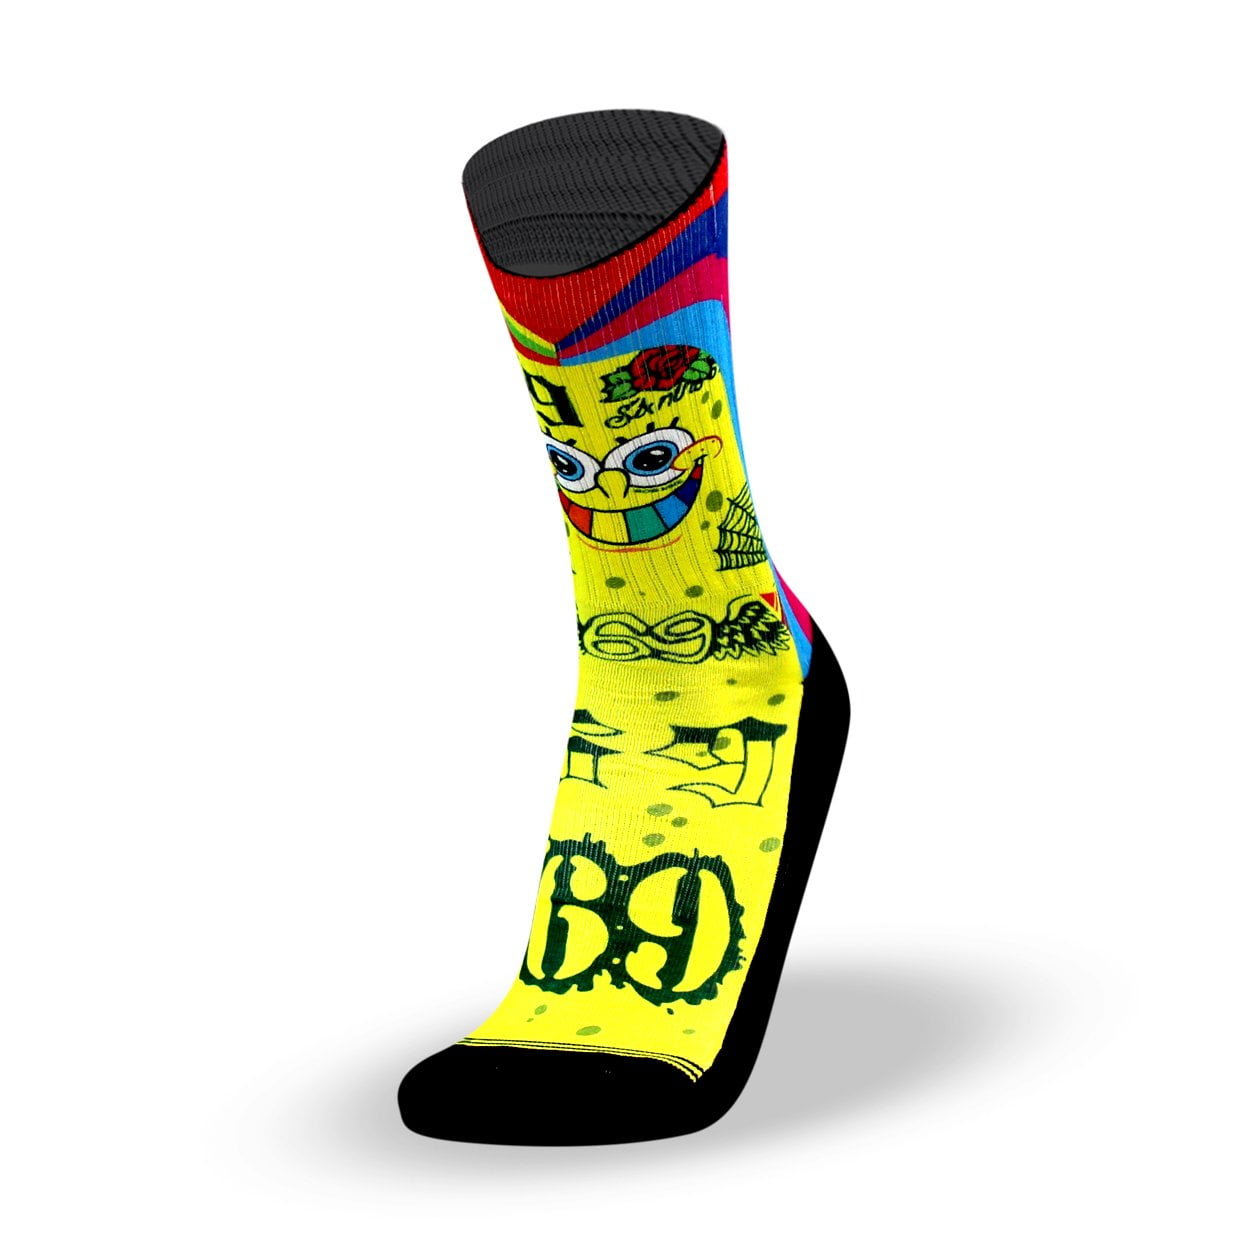 S0047 lithe bob esponja 69 face tattoo socks